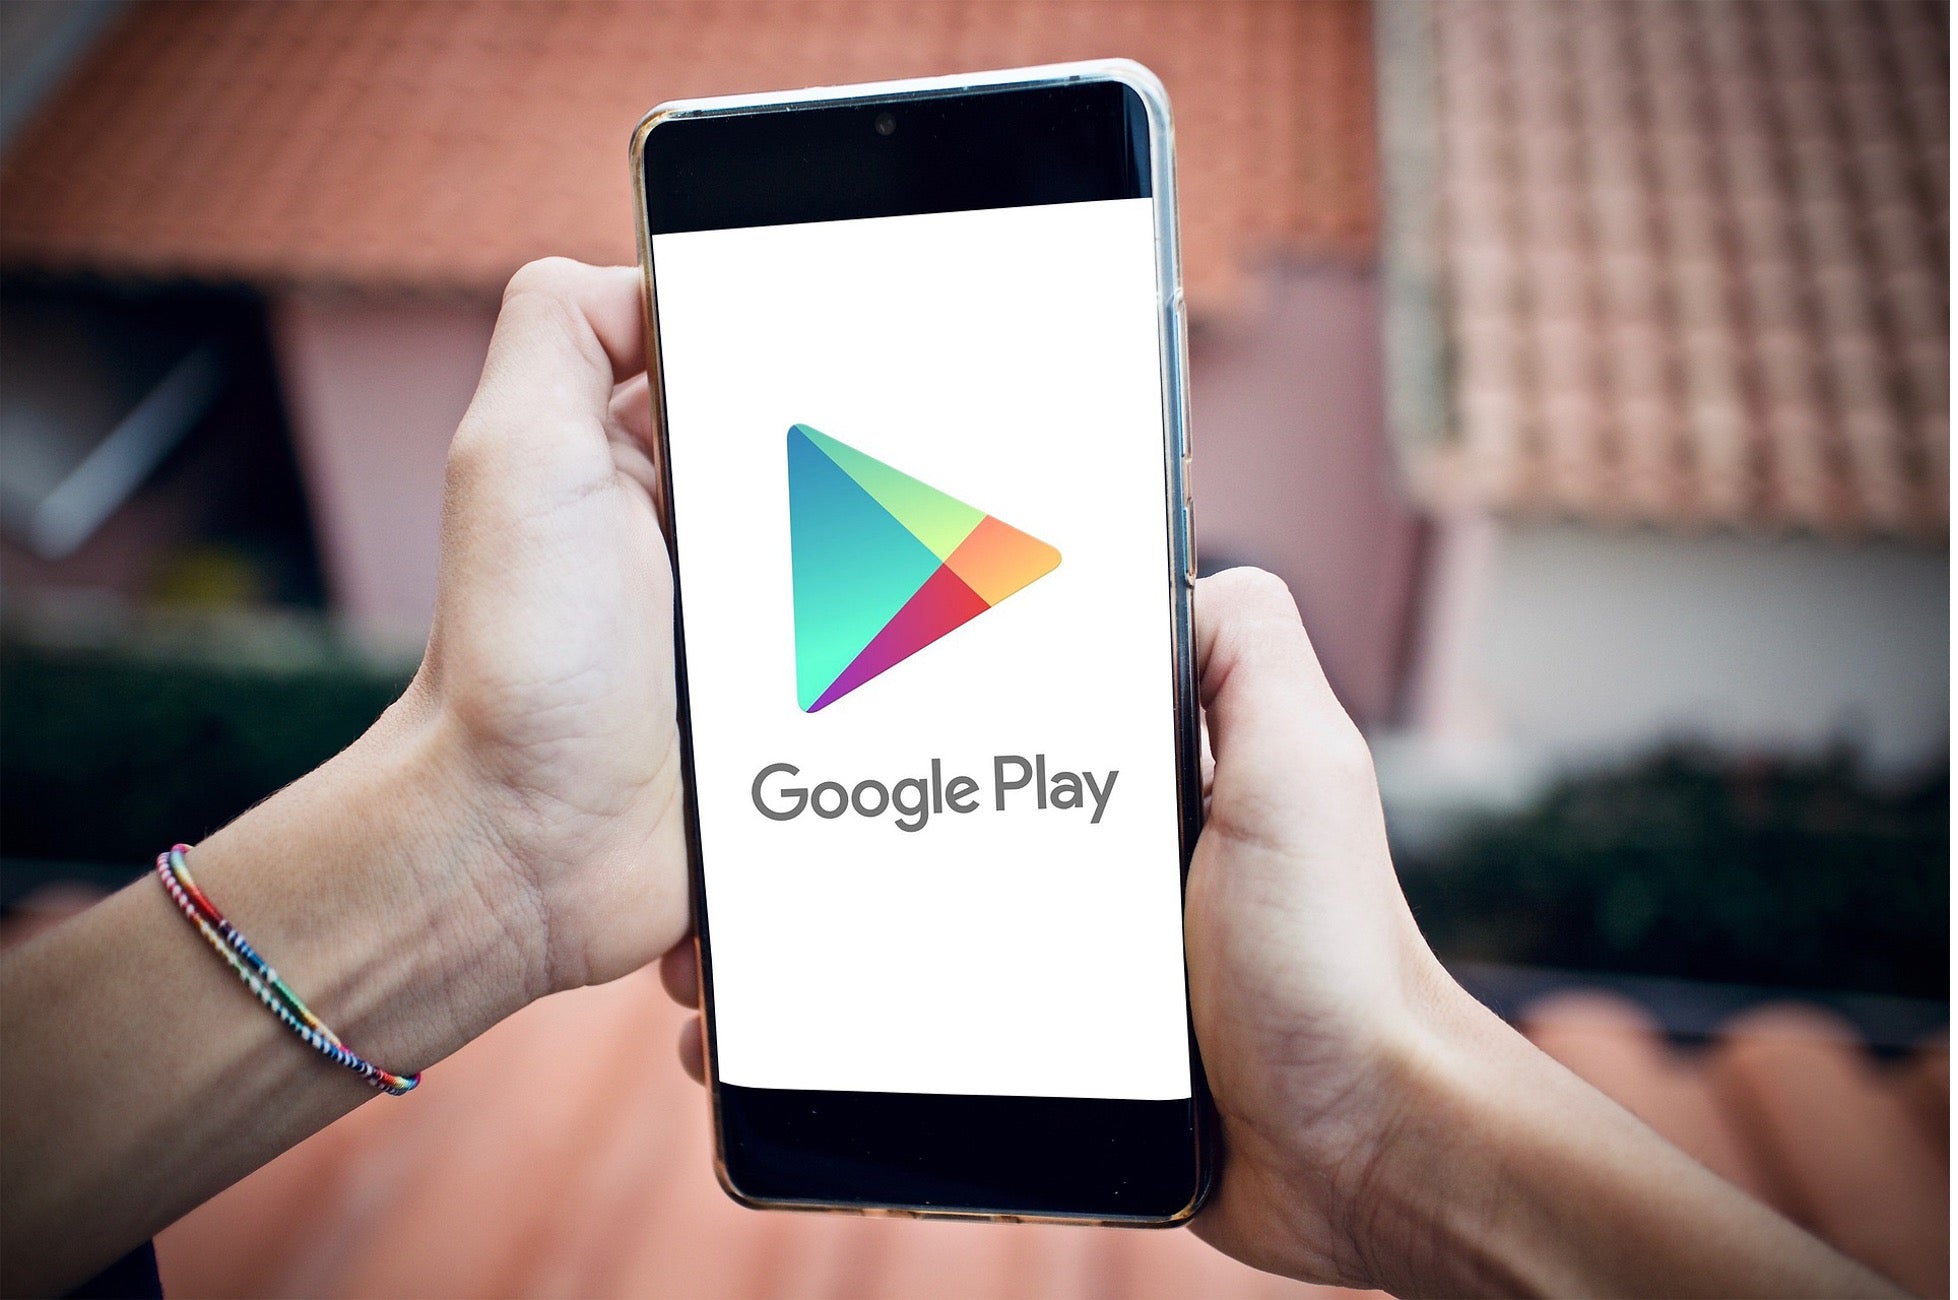 Free Redeem Code App, Google Play Gift Card Earning App 2022